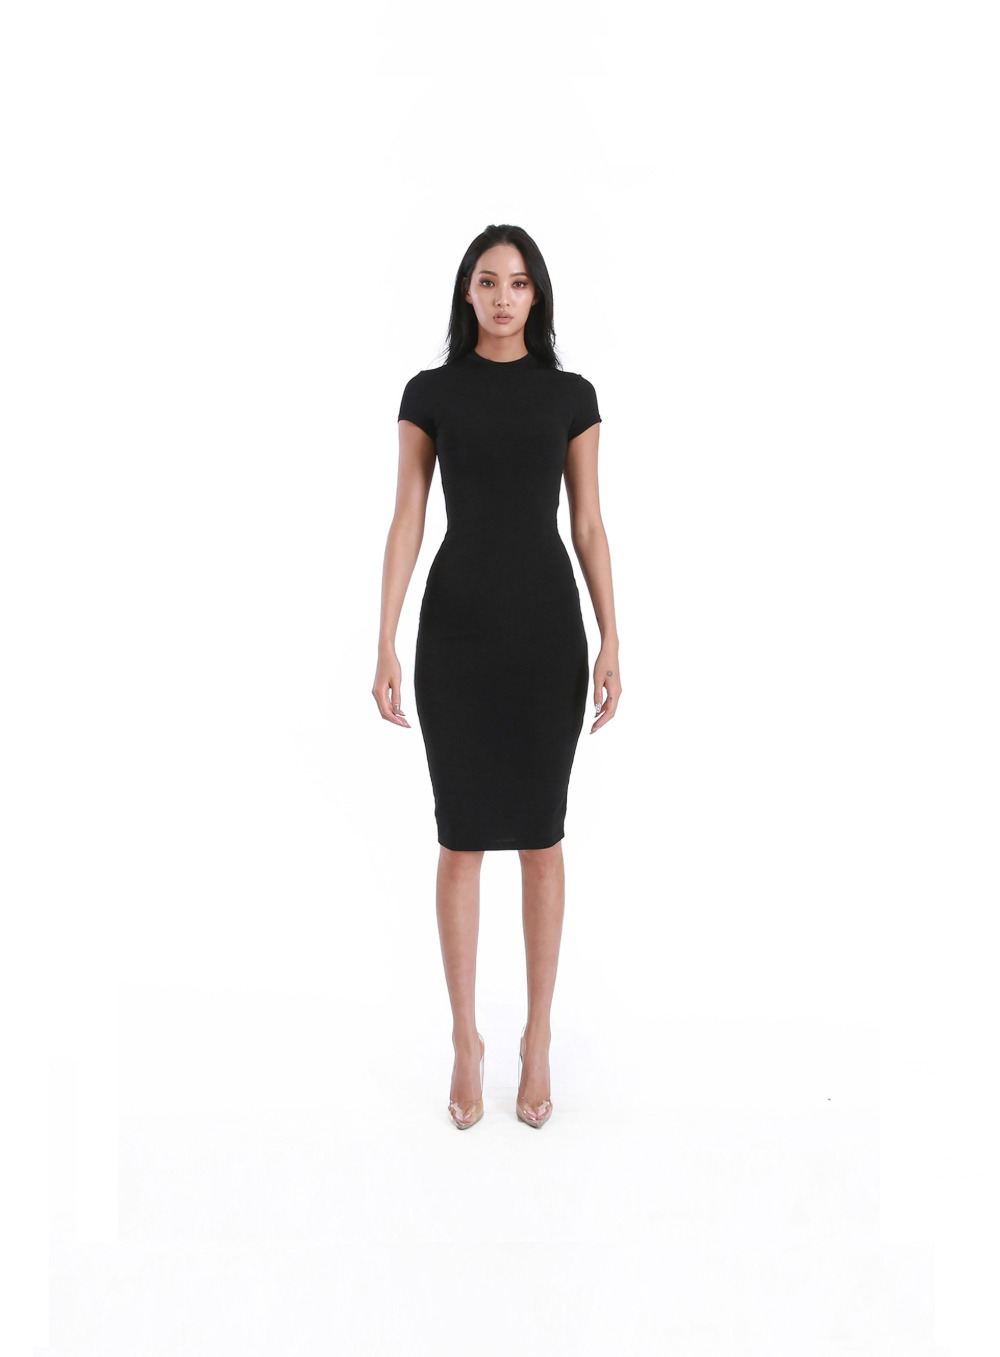 LAWRENCE DRESS - BLACK 로렌스 드레스